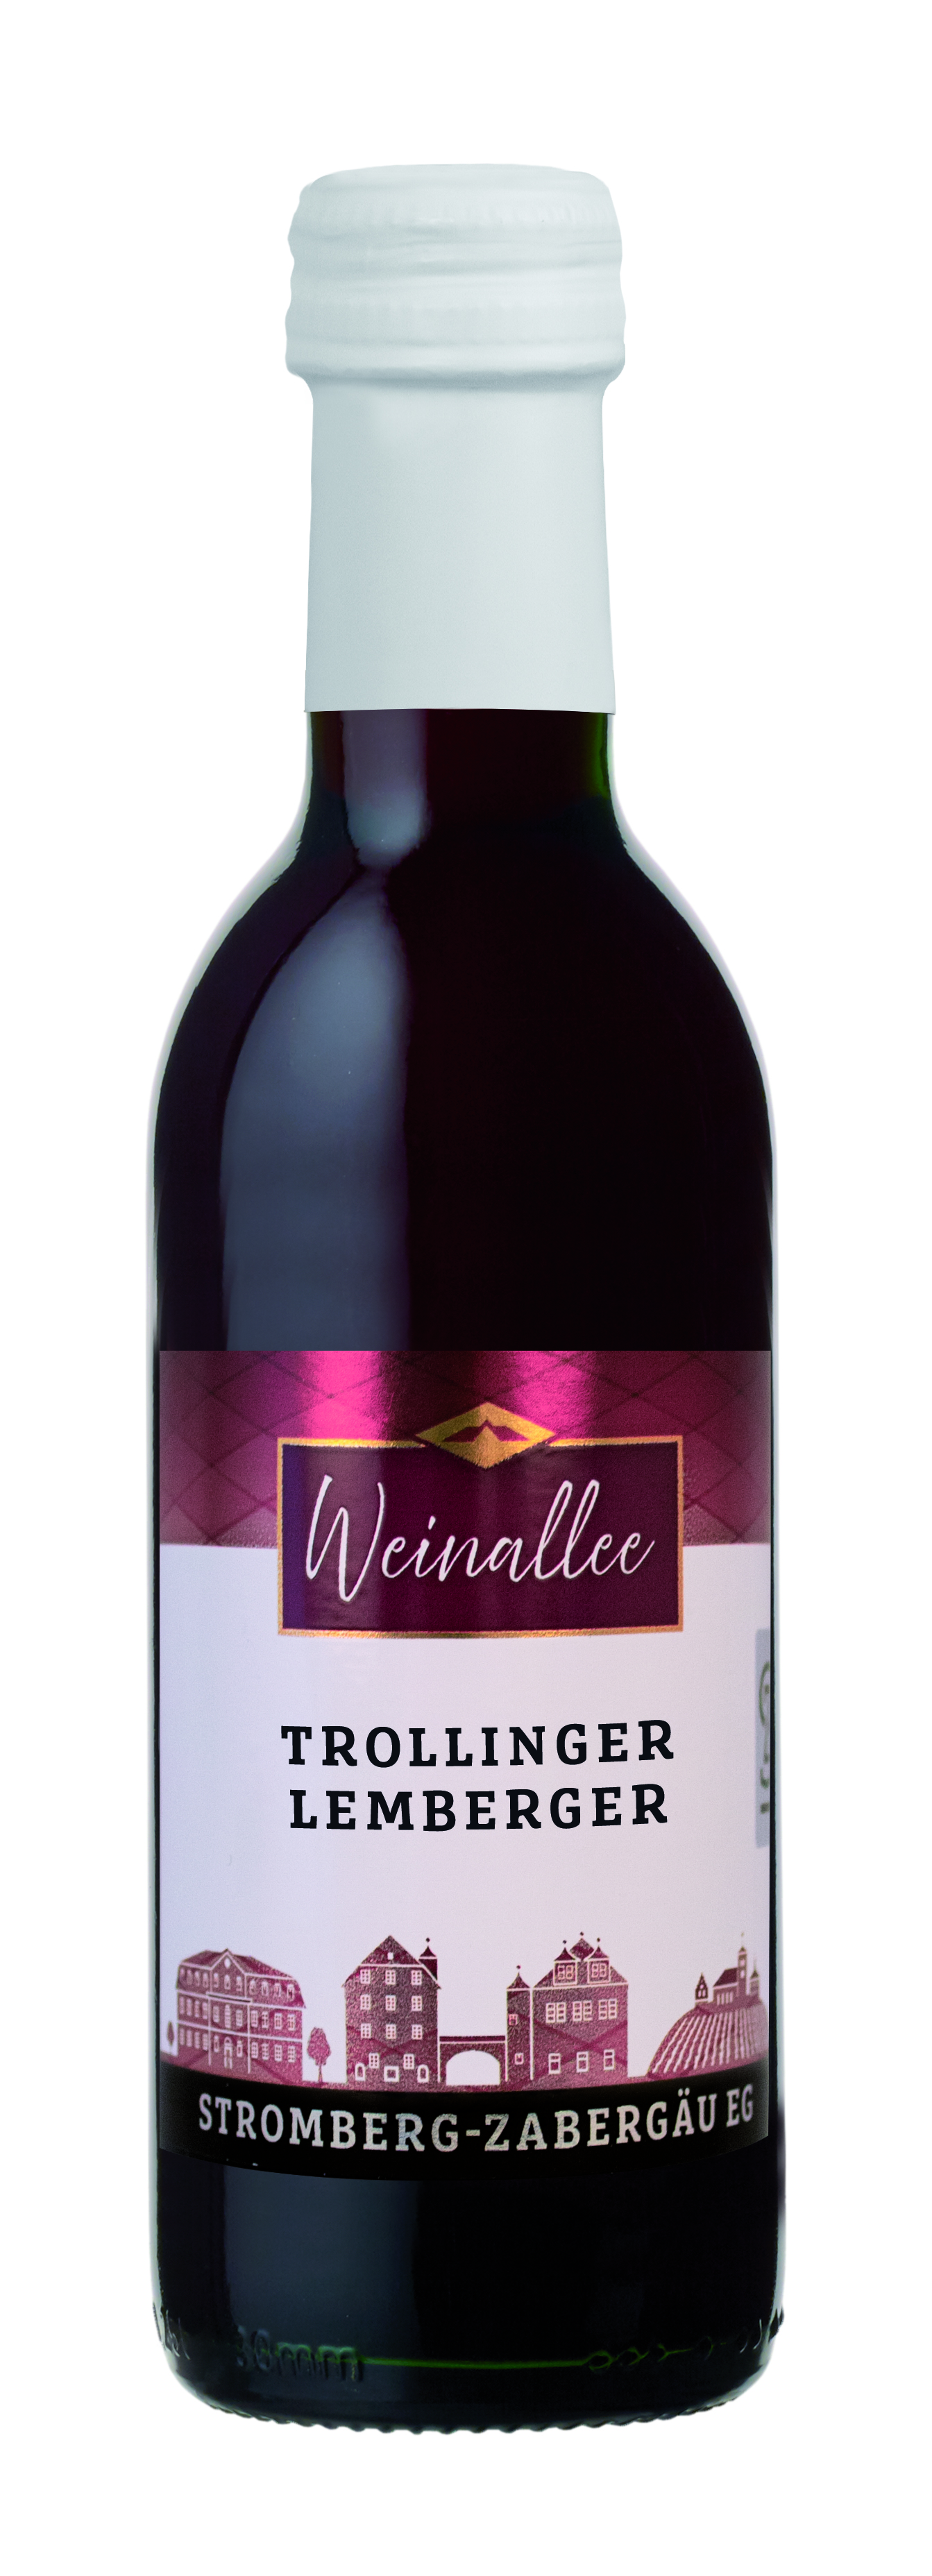 2021 Trollinger mit Lemberger halbtrocken 0,25 L - Weinallee